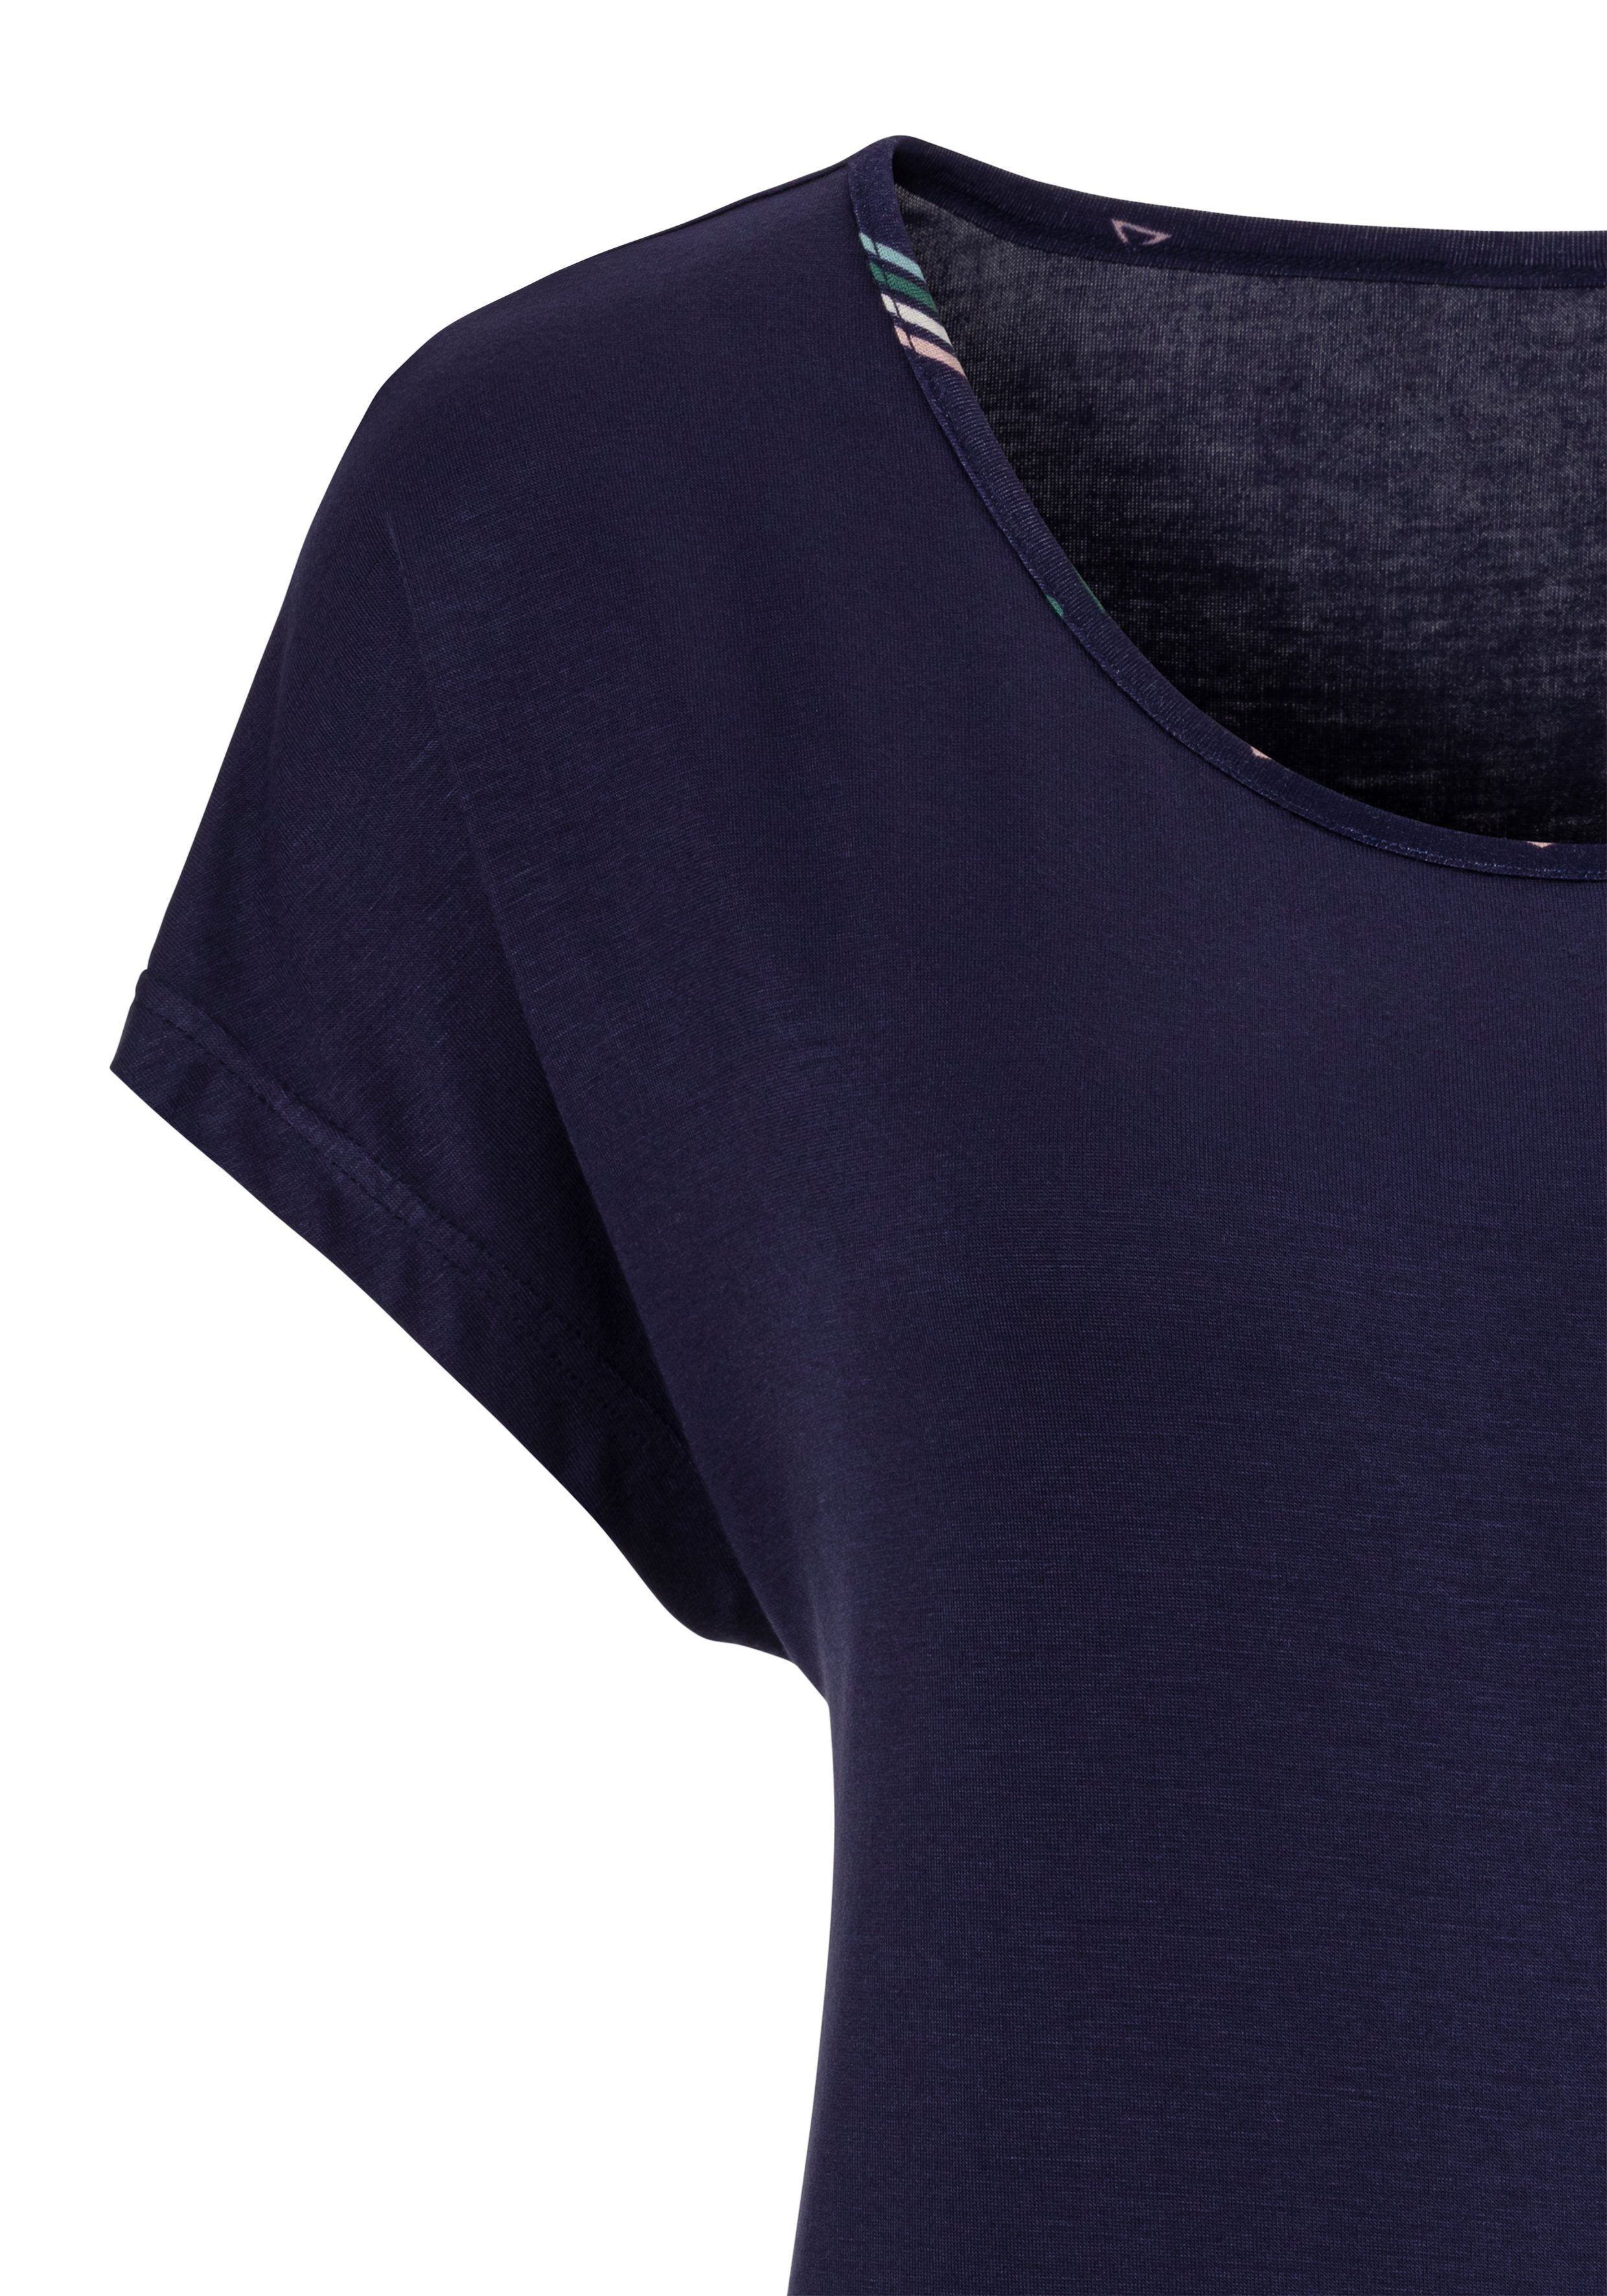 LASCANA T-Shirt angeschnittenem mit Arm dunkelblau